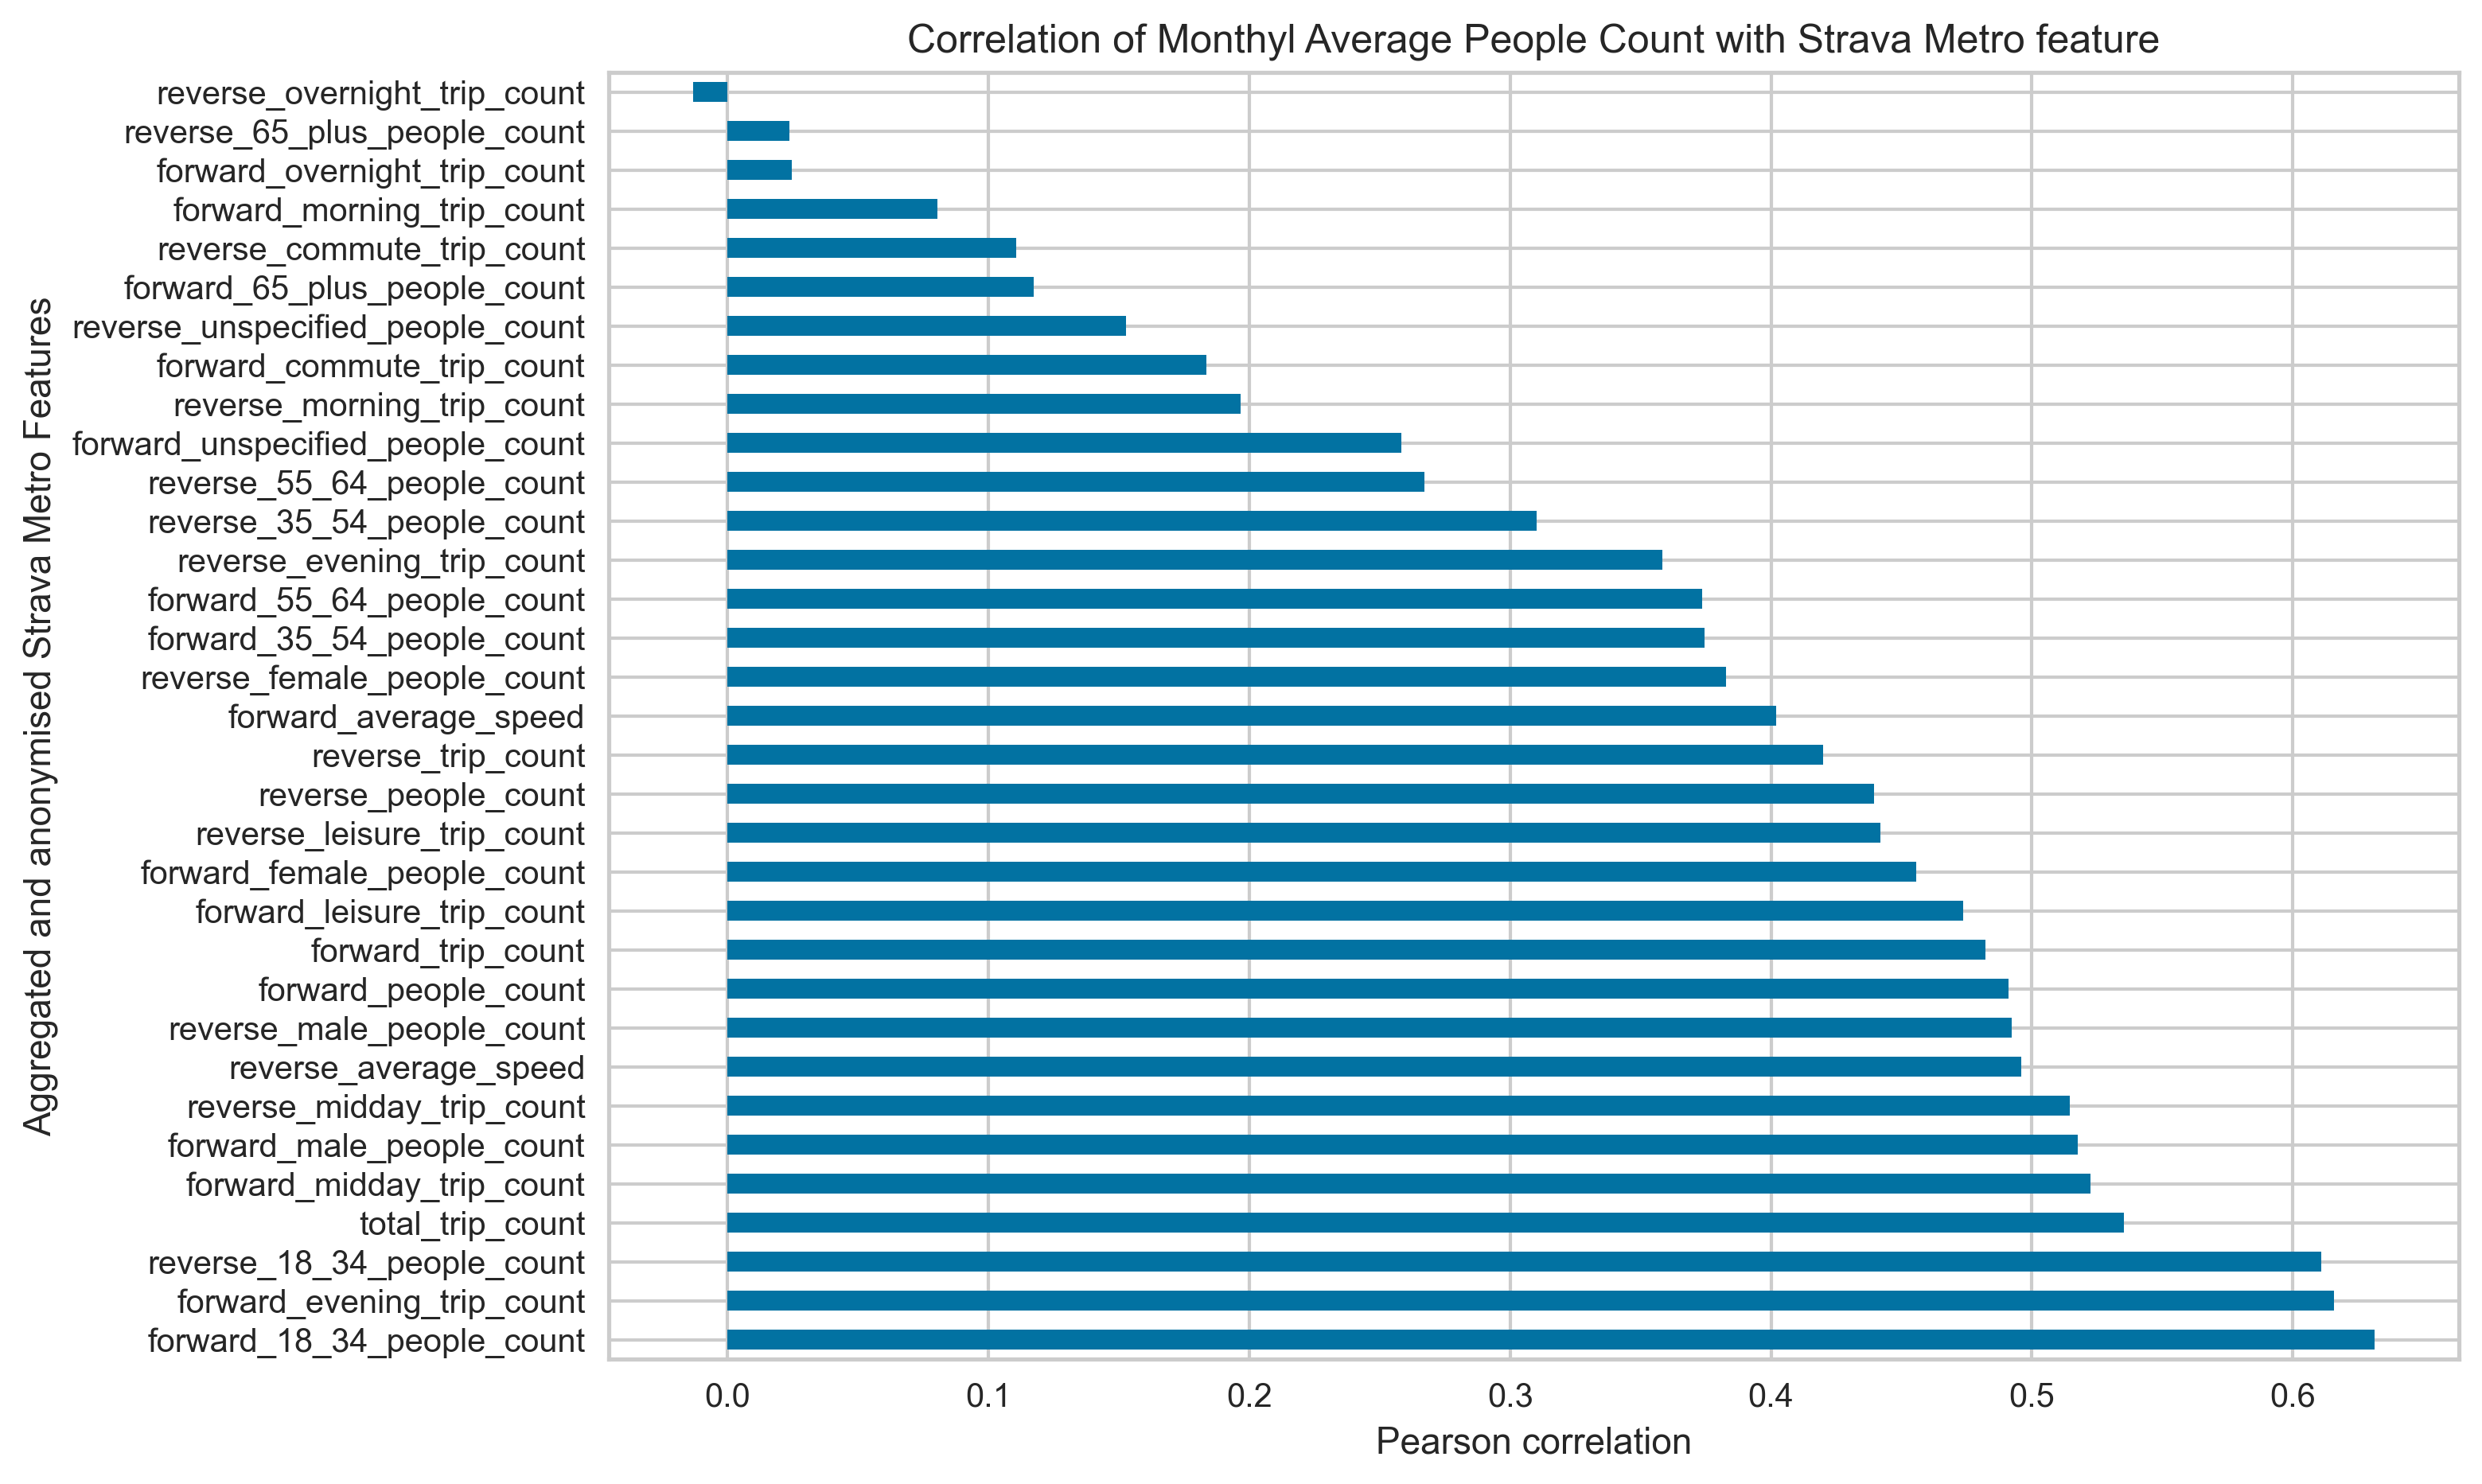 Figure 9: Correlation between Strava Metro data and people counter data. 